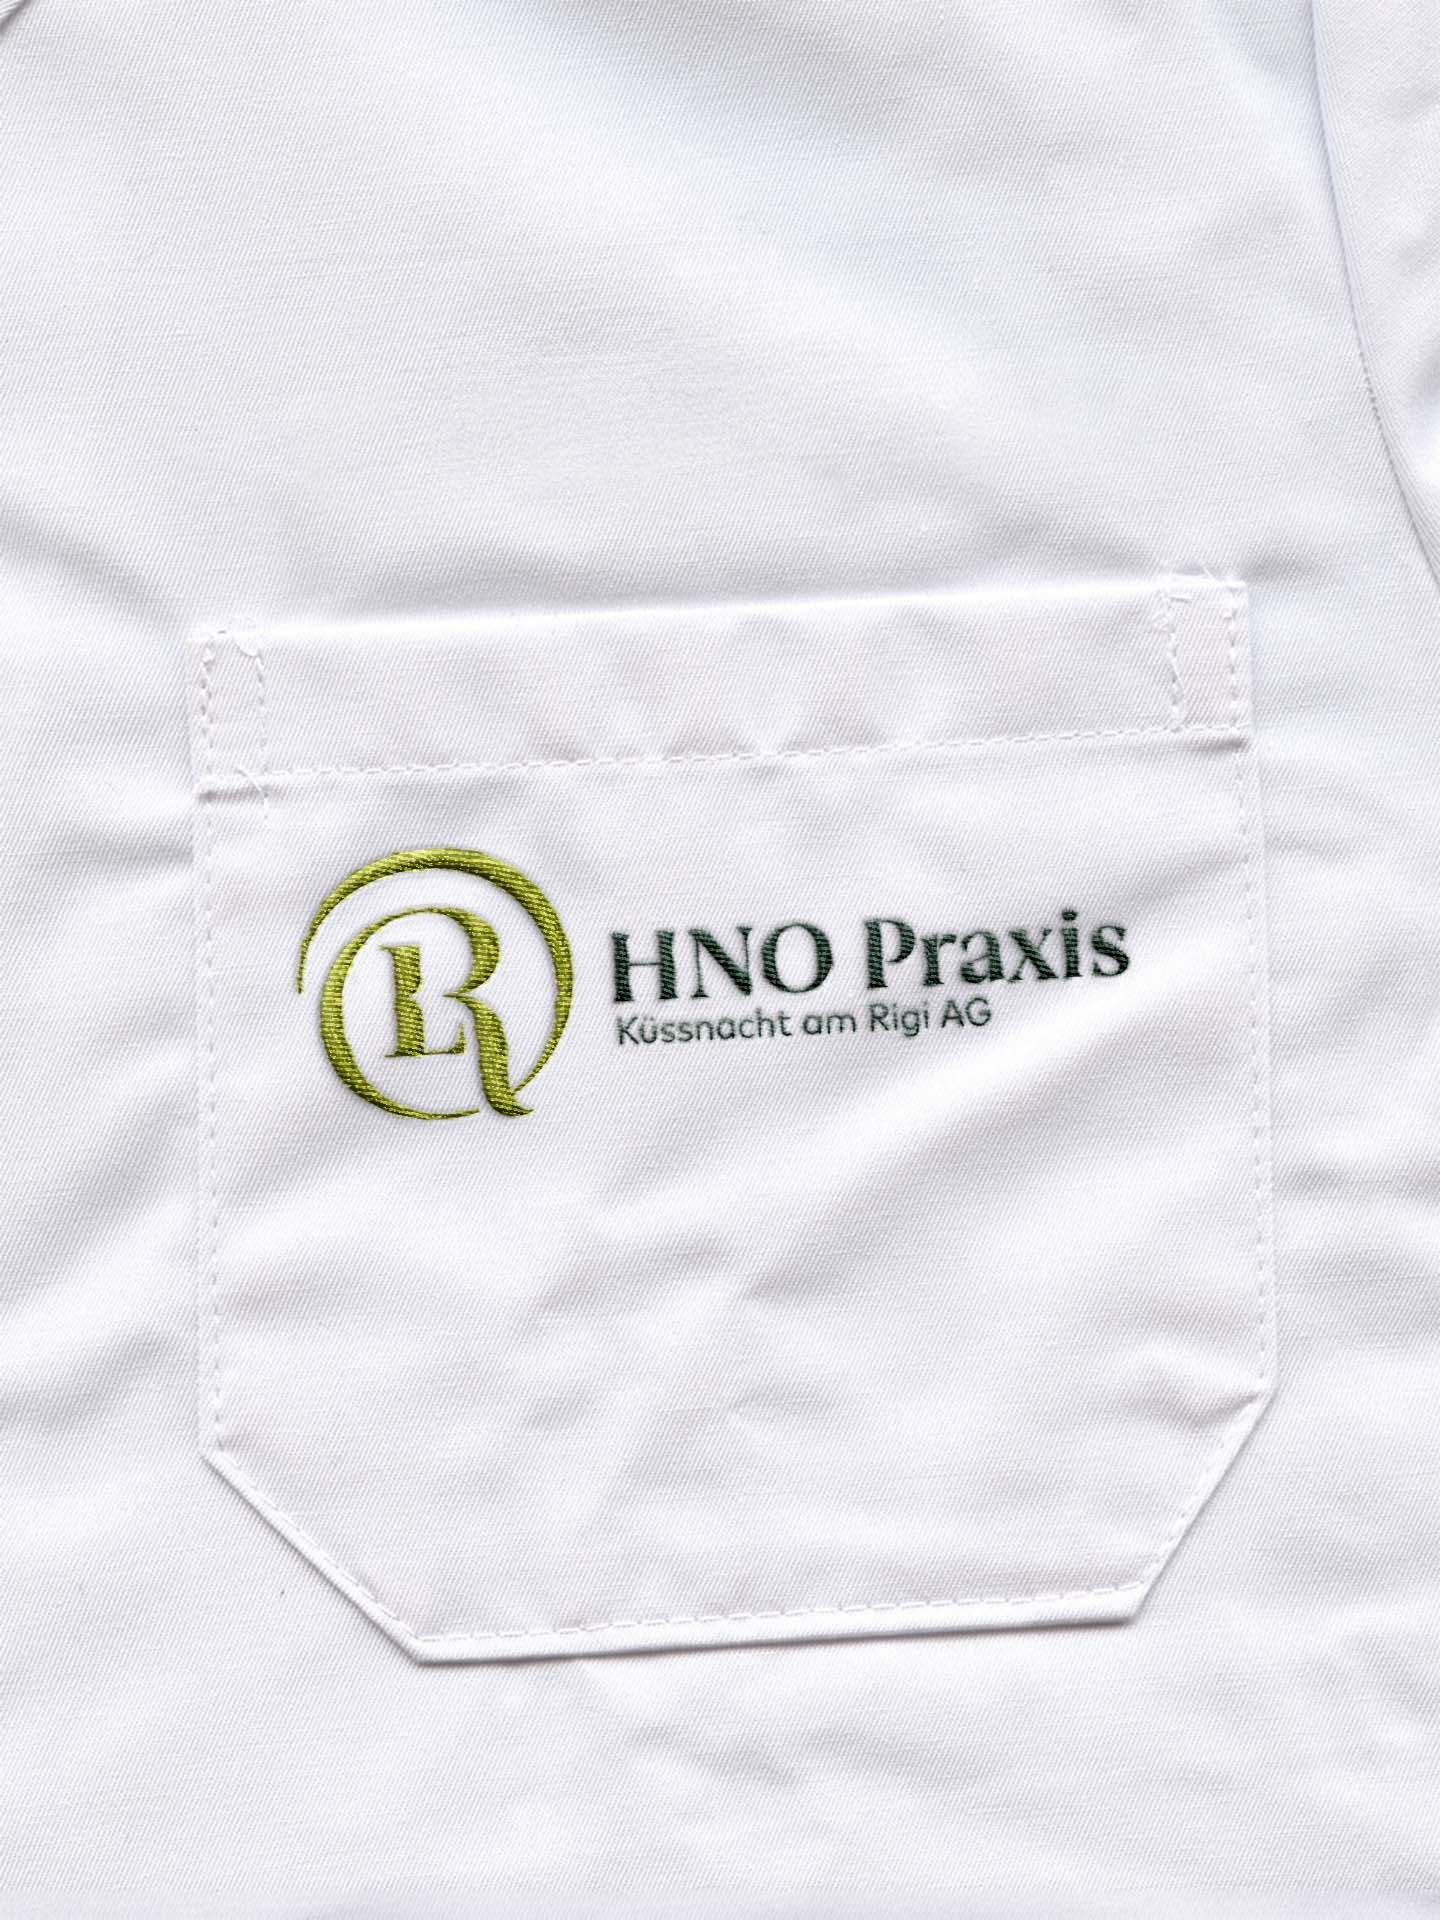 White coat with embroidered logo design for HNO Praxis Küssnacht am Rigi AG